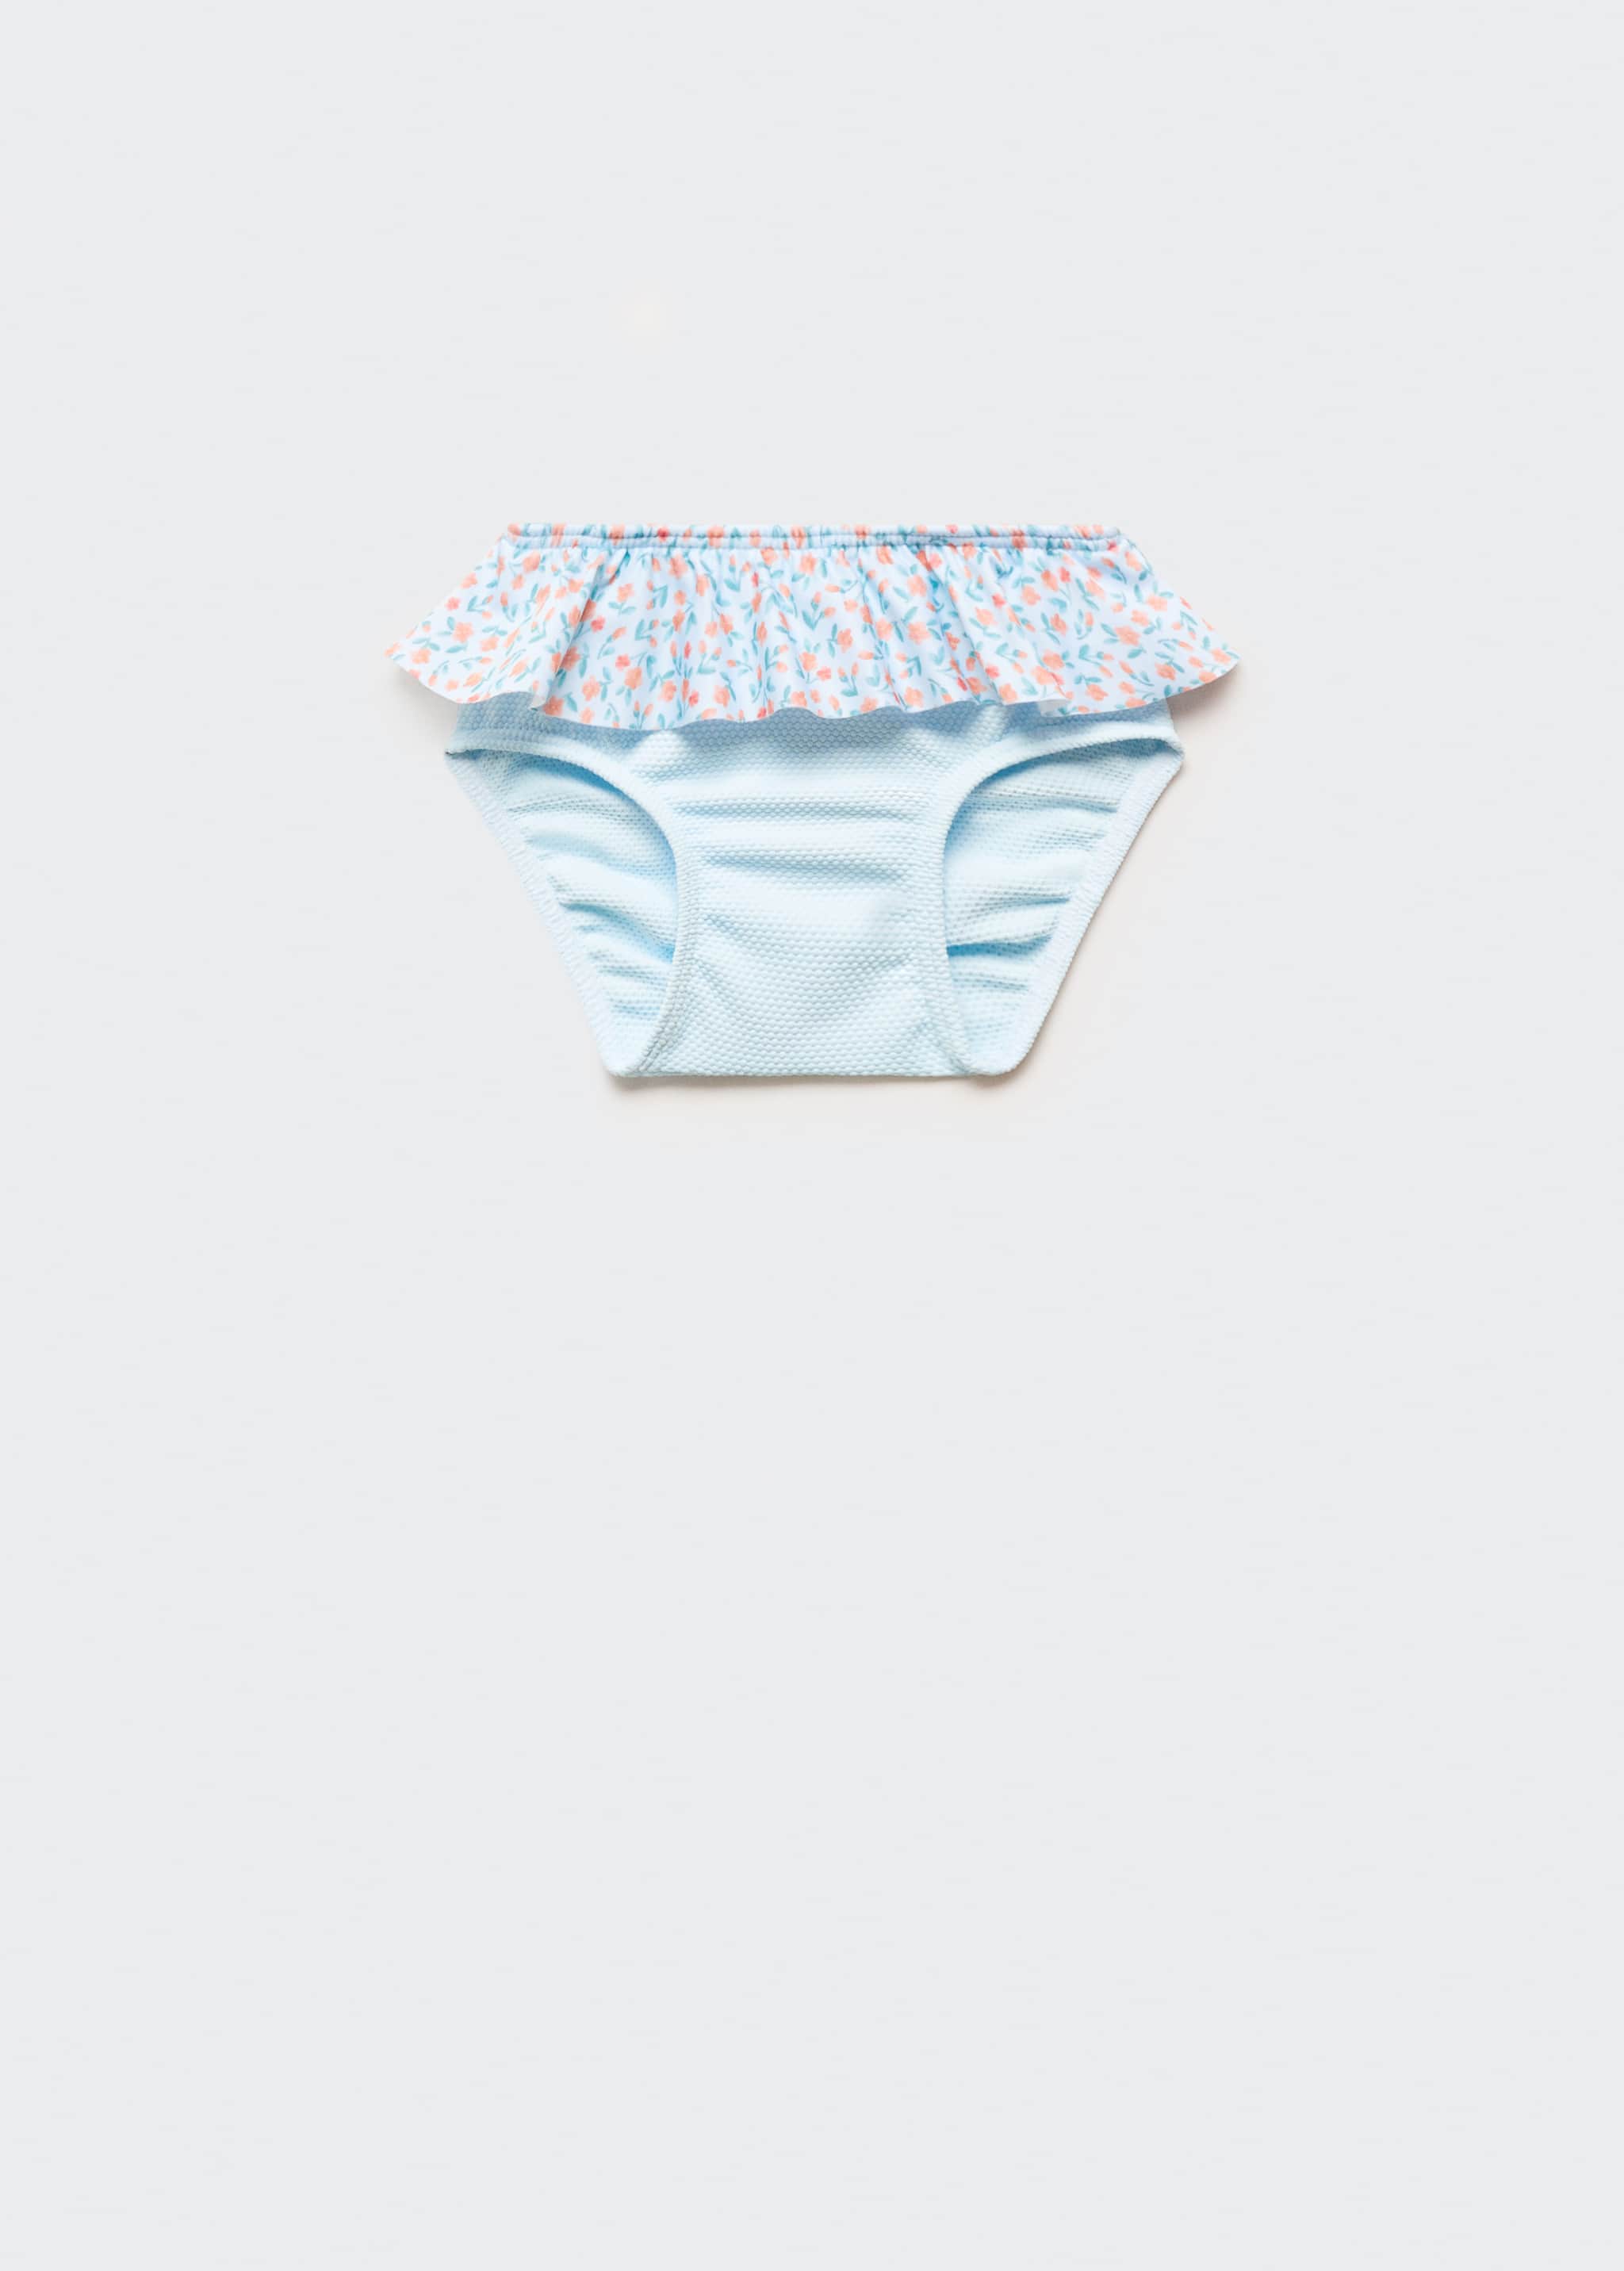 Ruffled floral bikini bottom - Article without model